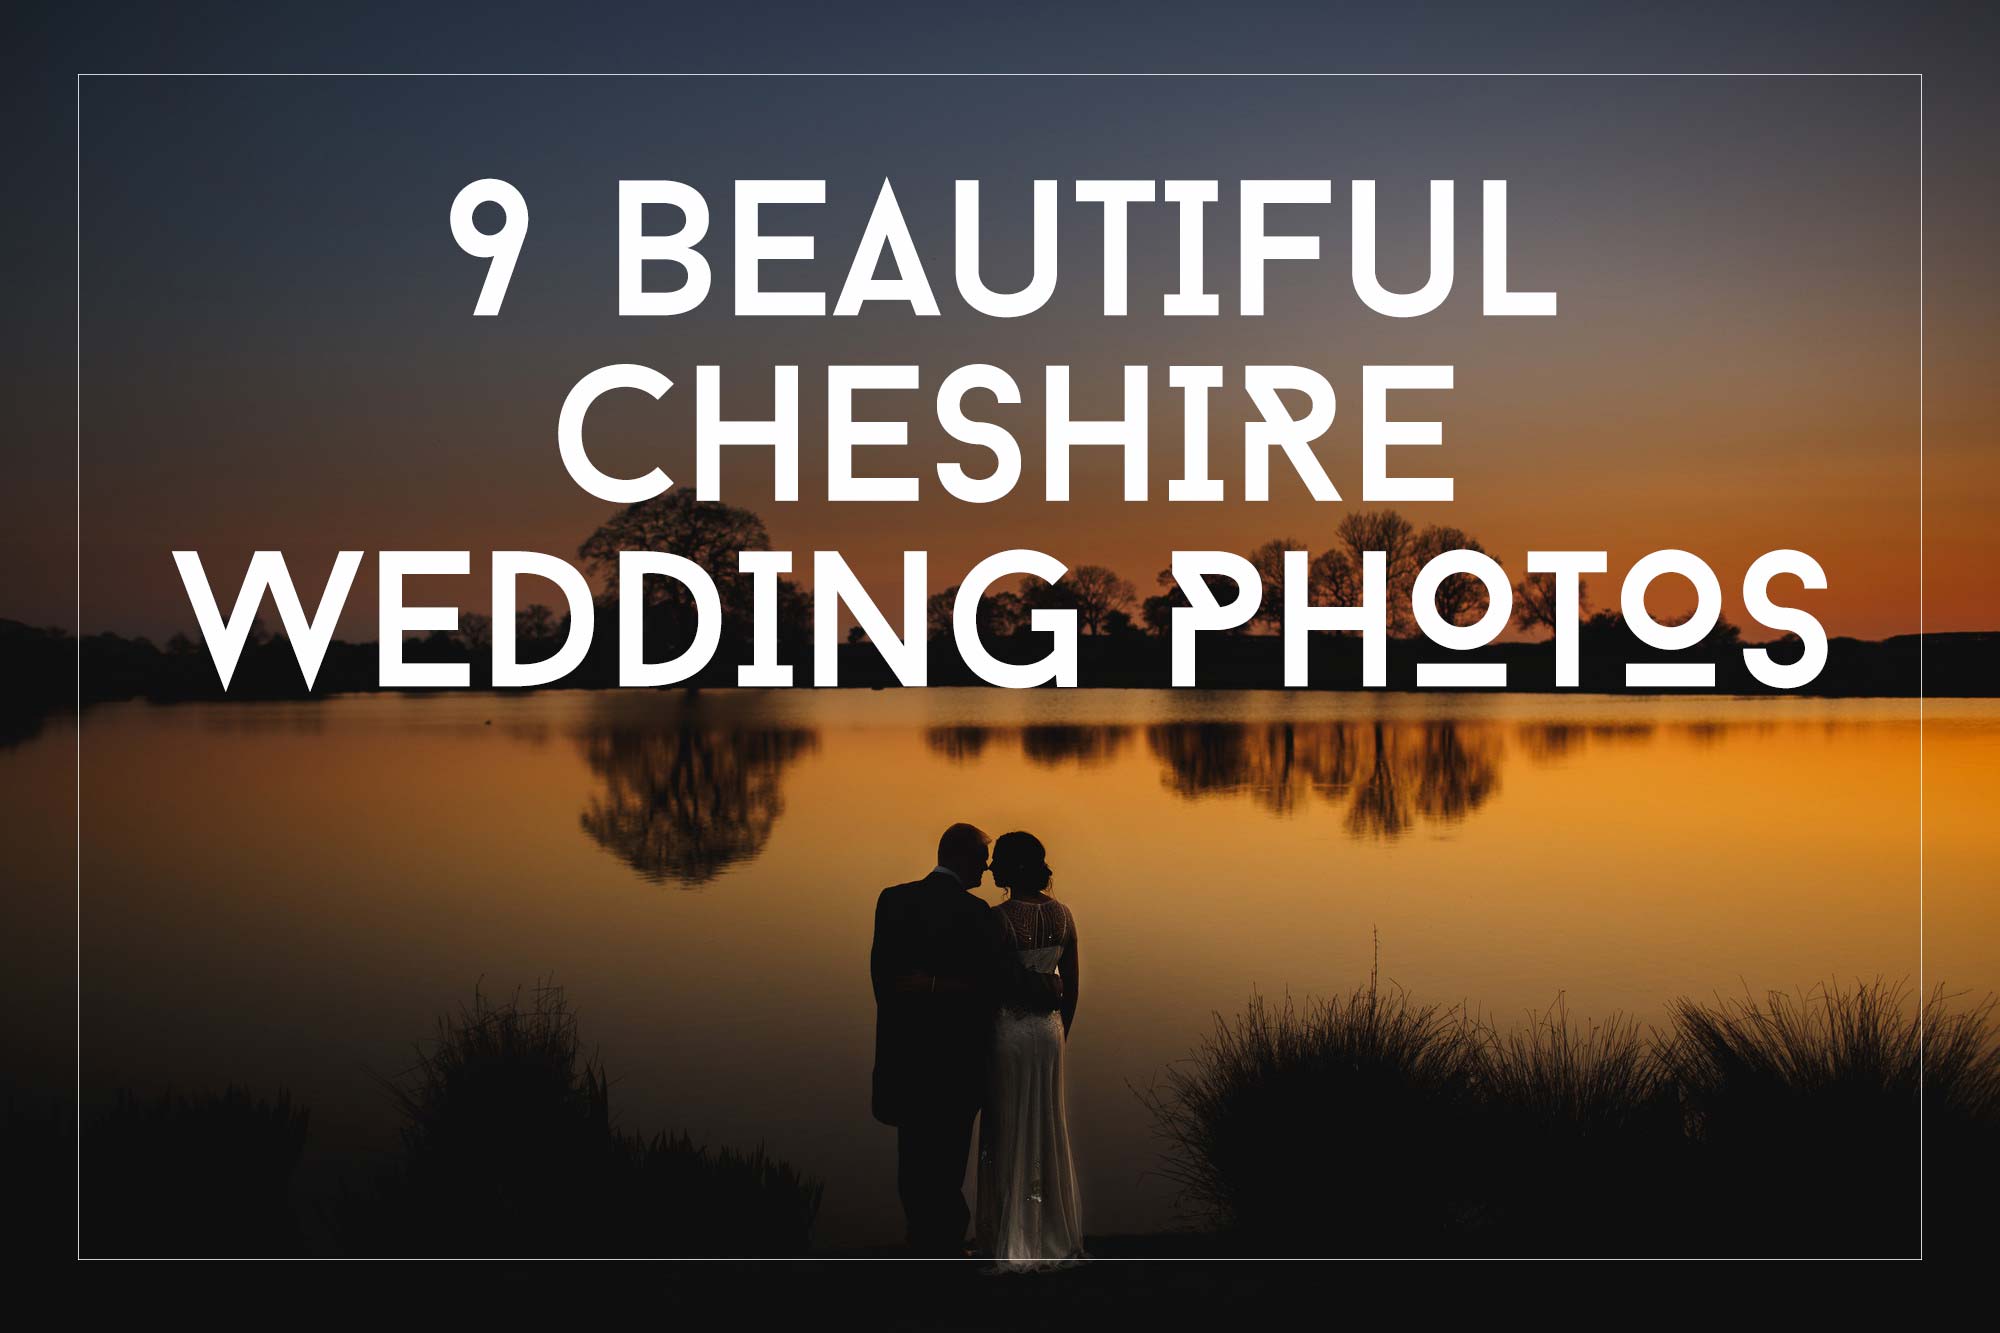 Beautiful cheshire wedding photos by arj photography®